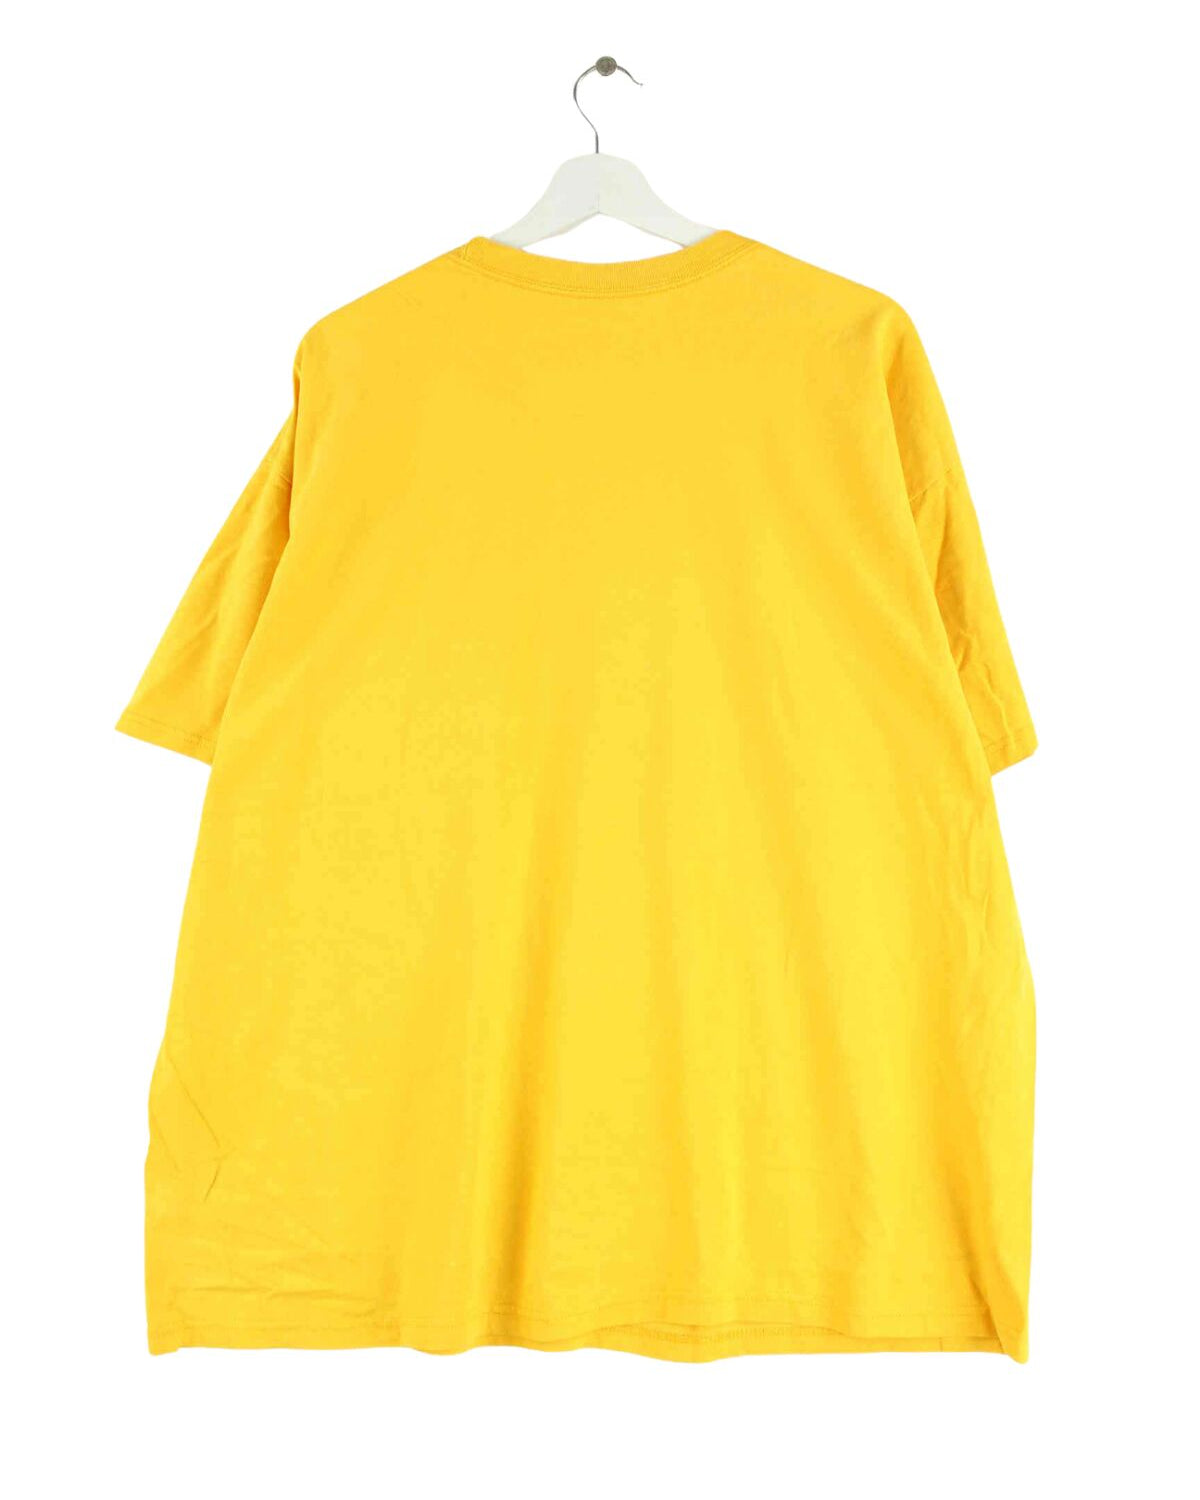 Nike Minnesota Print T-Shirt Gelb XL (back image)